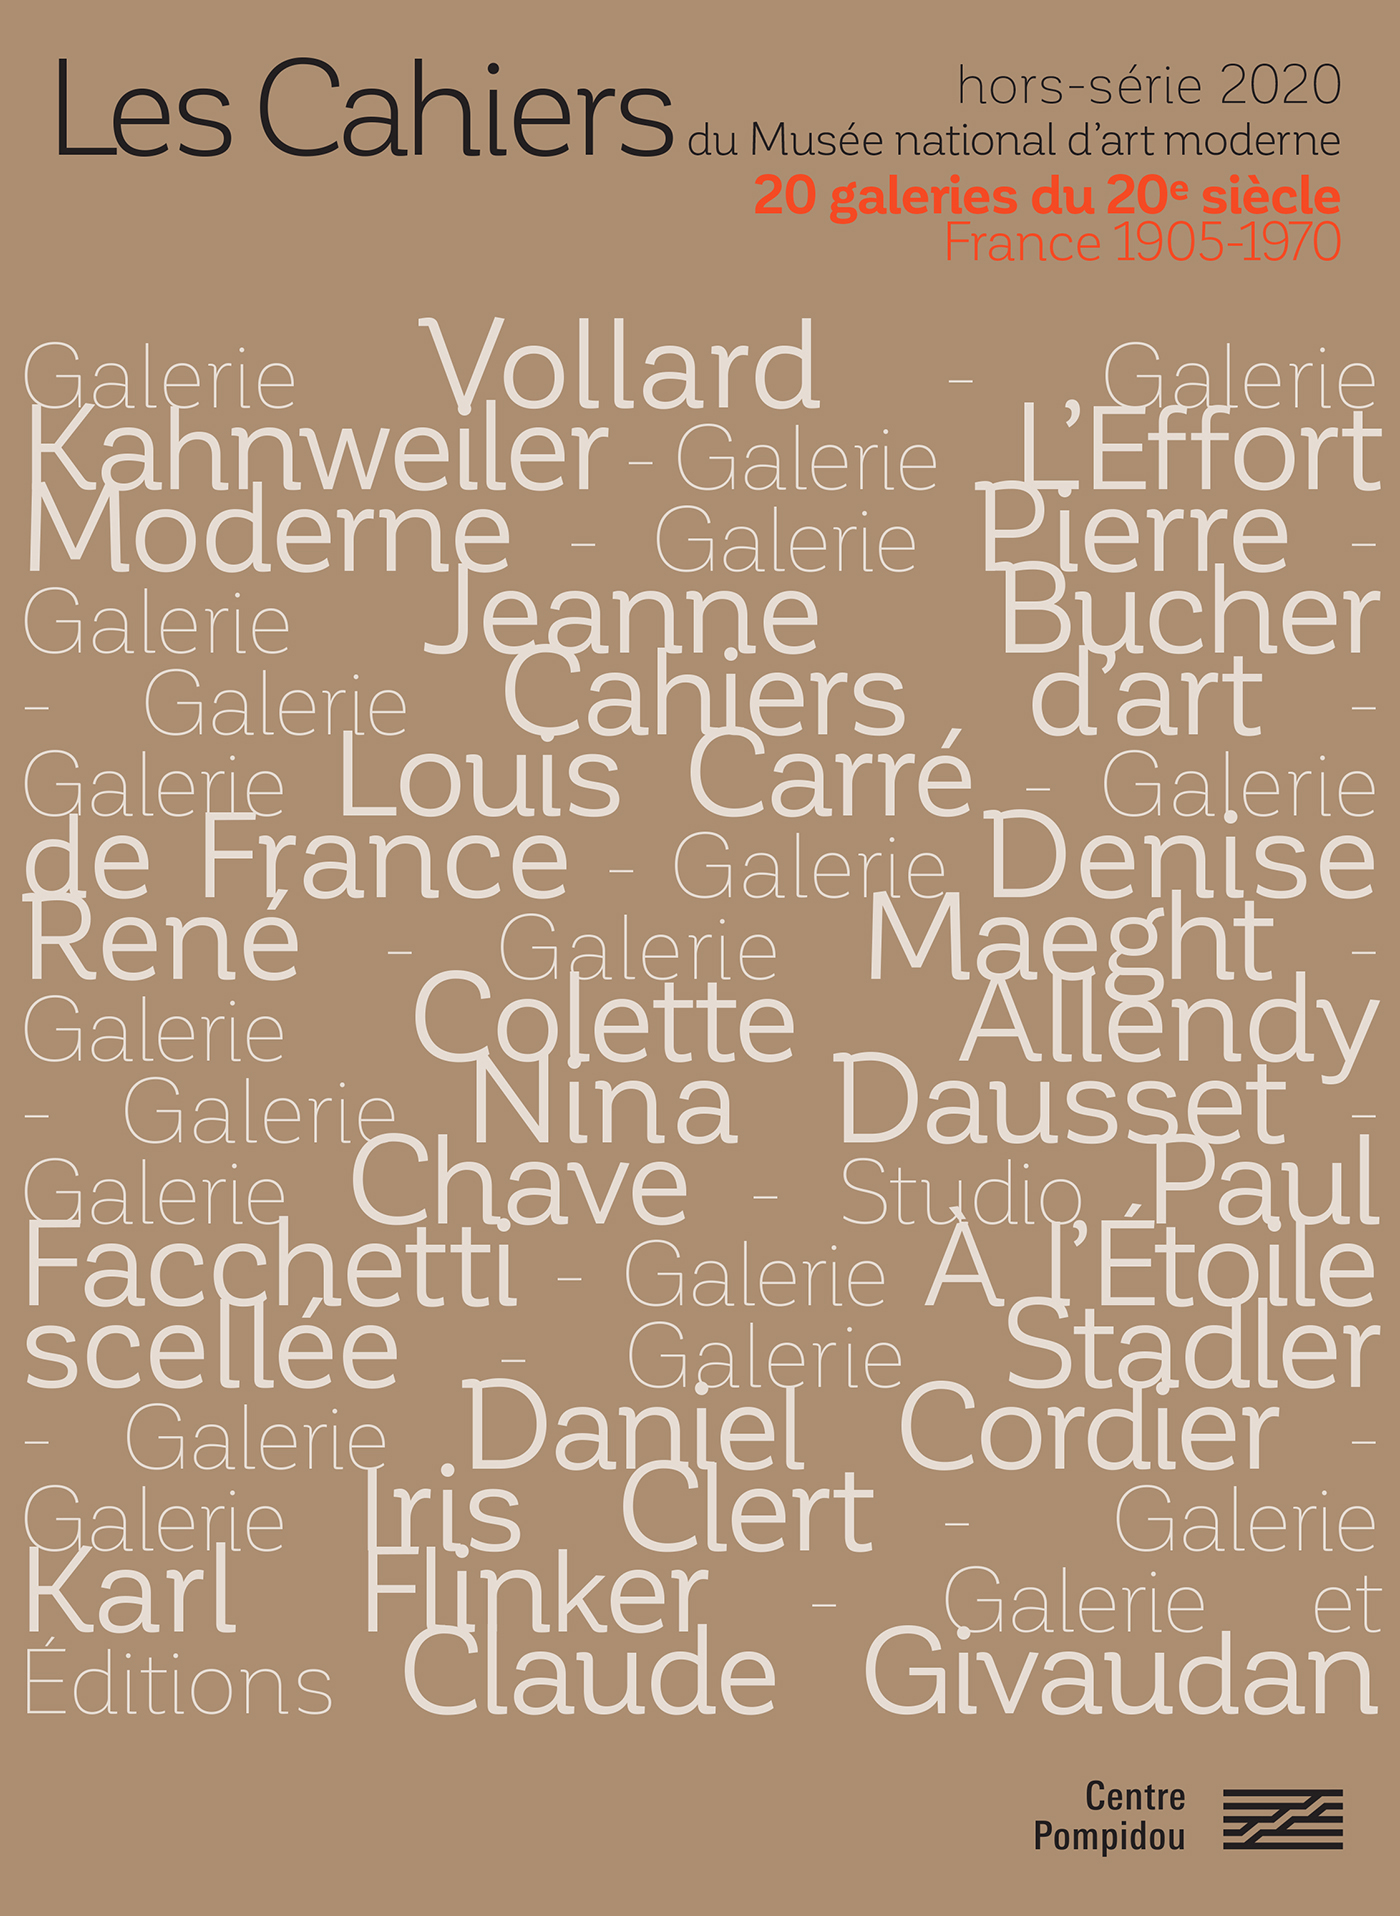 You are currently viewing Hors série 20 galeries du 20e siècle des Cahiers du Musée national d’art moderne